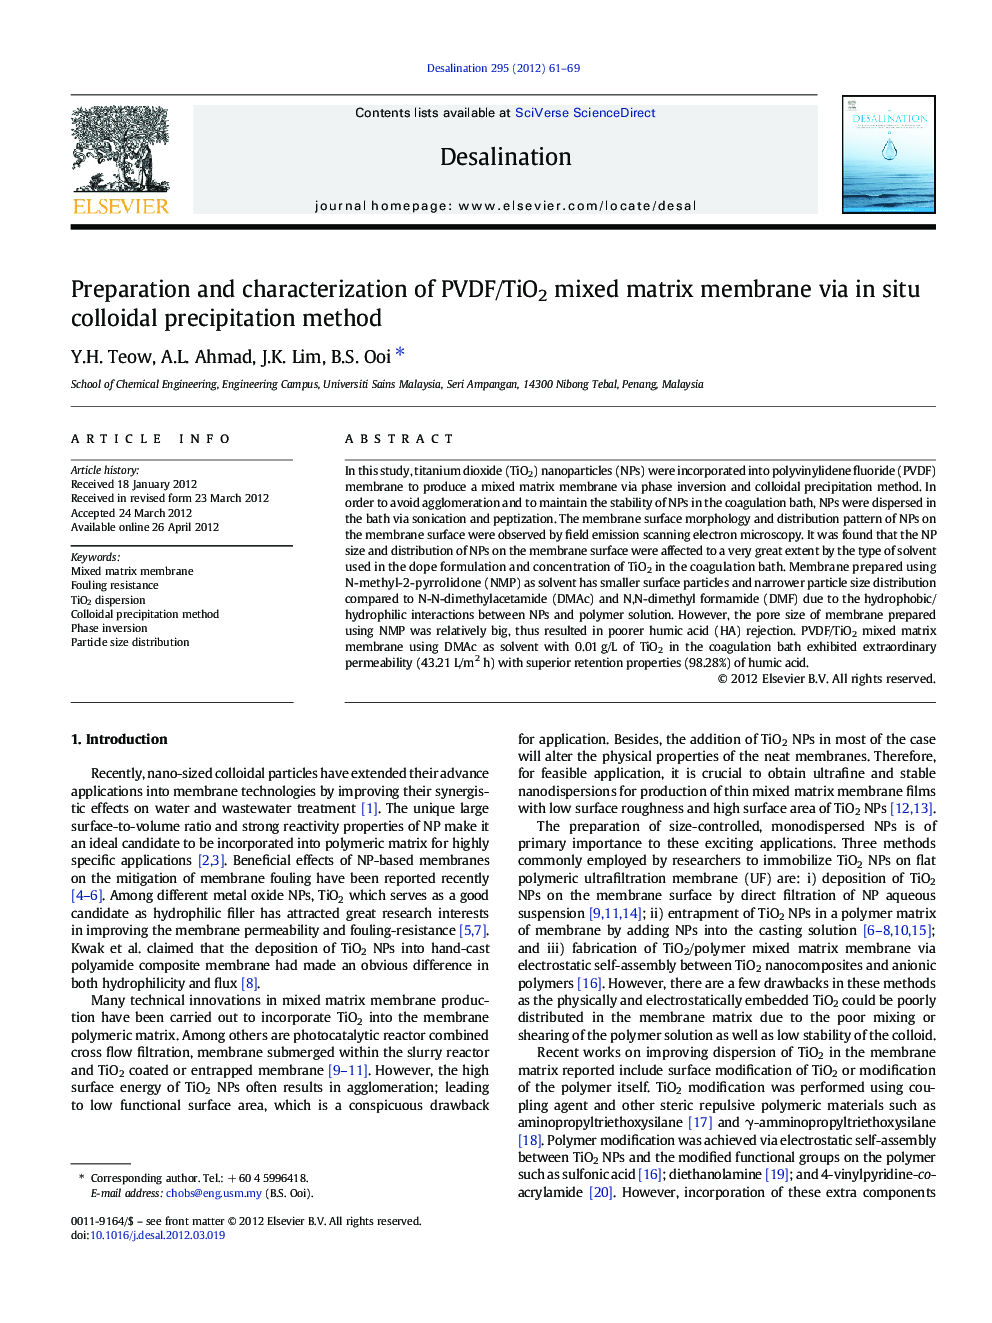 Preparation and characterization of PVDF/TiO2 mixed matrix membrane via in situ colloidal precipitation method